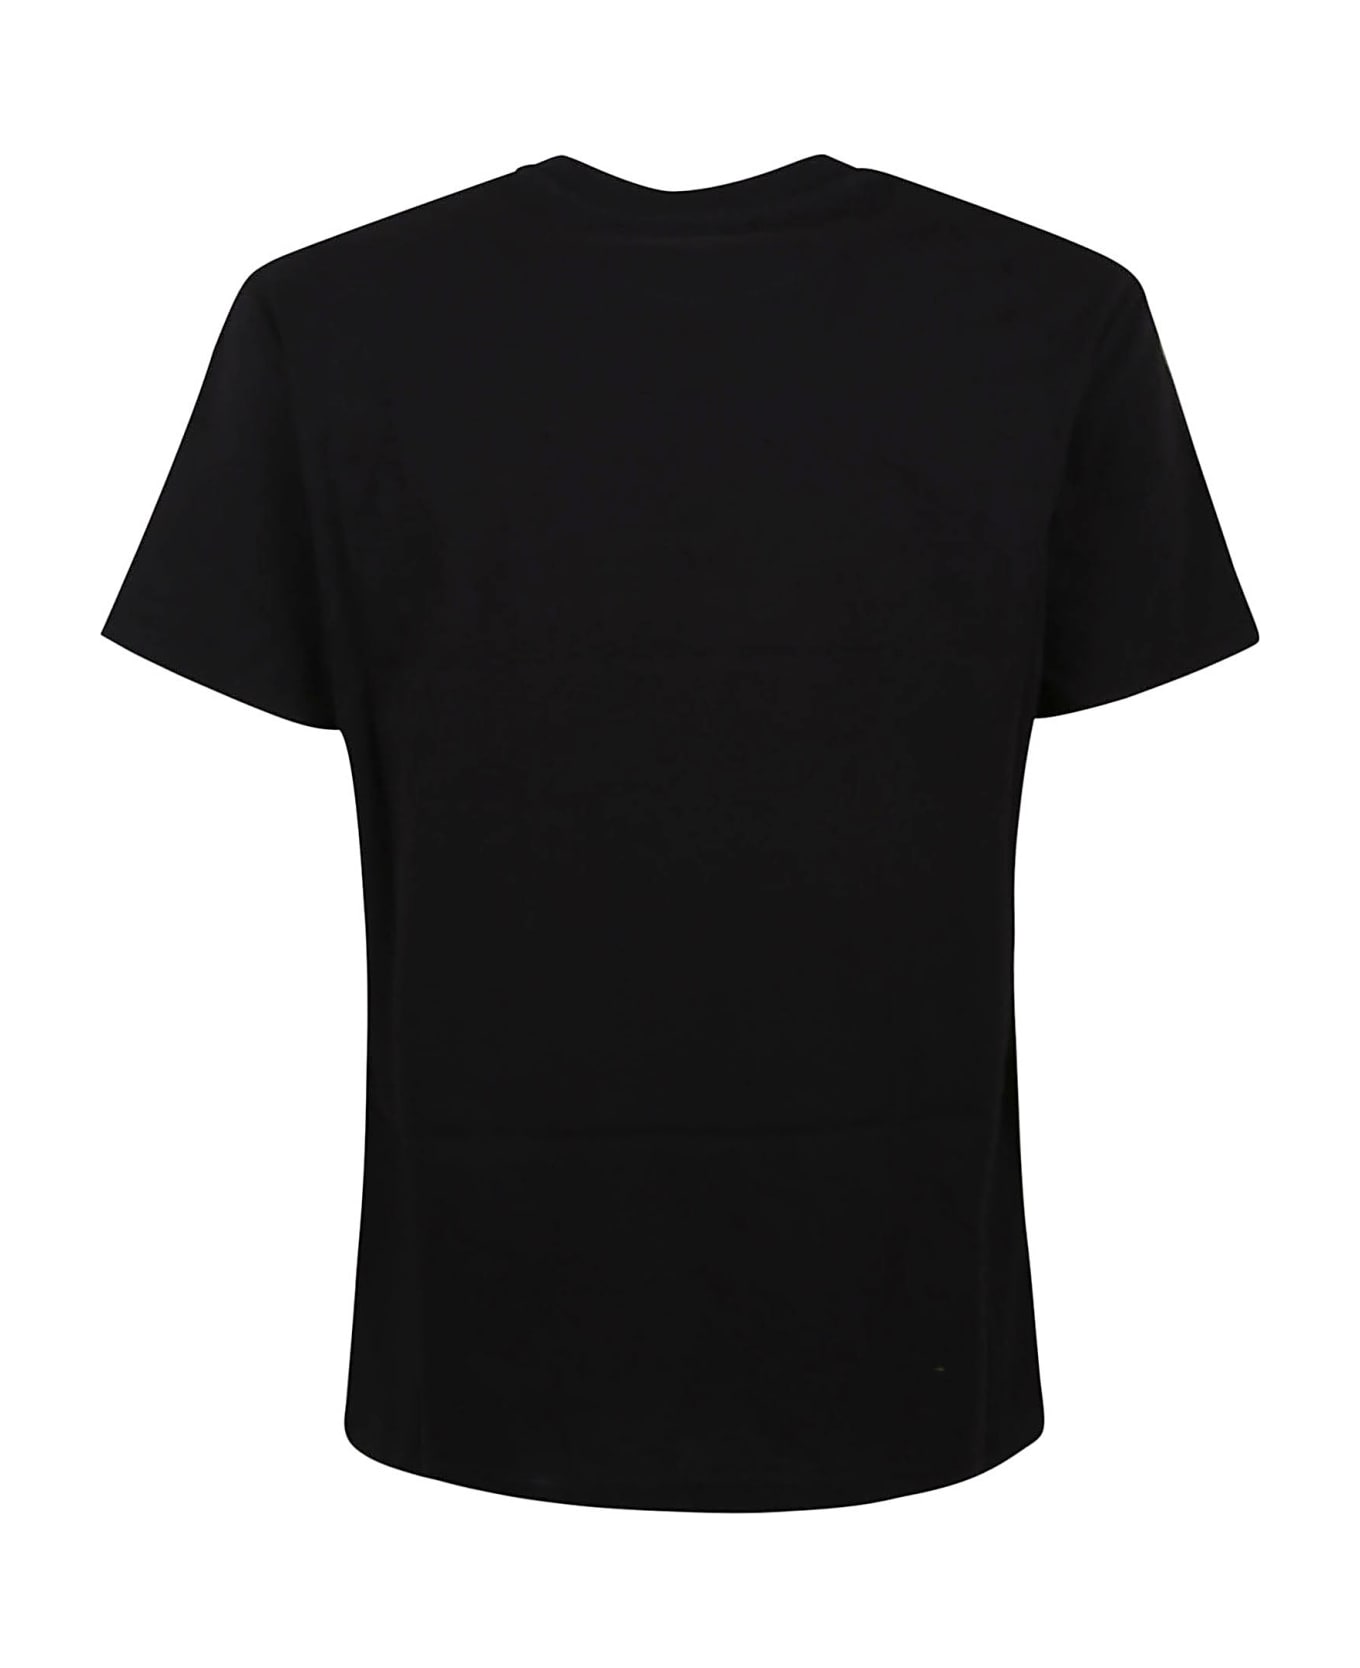 Valentino Garavani T-shirt Jersey Print Vltn - Black シャツ